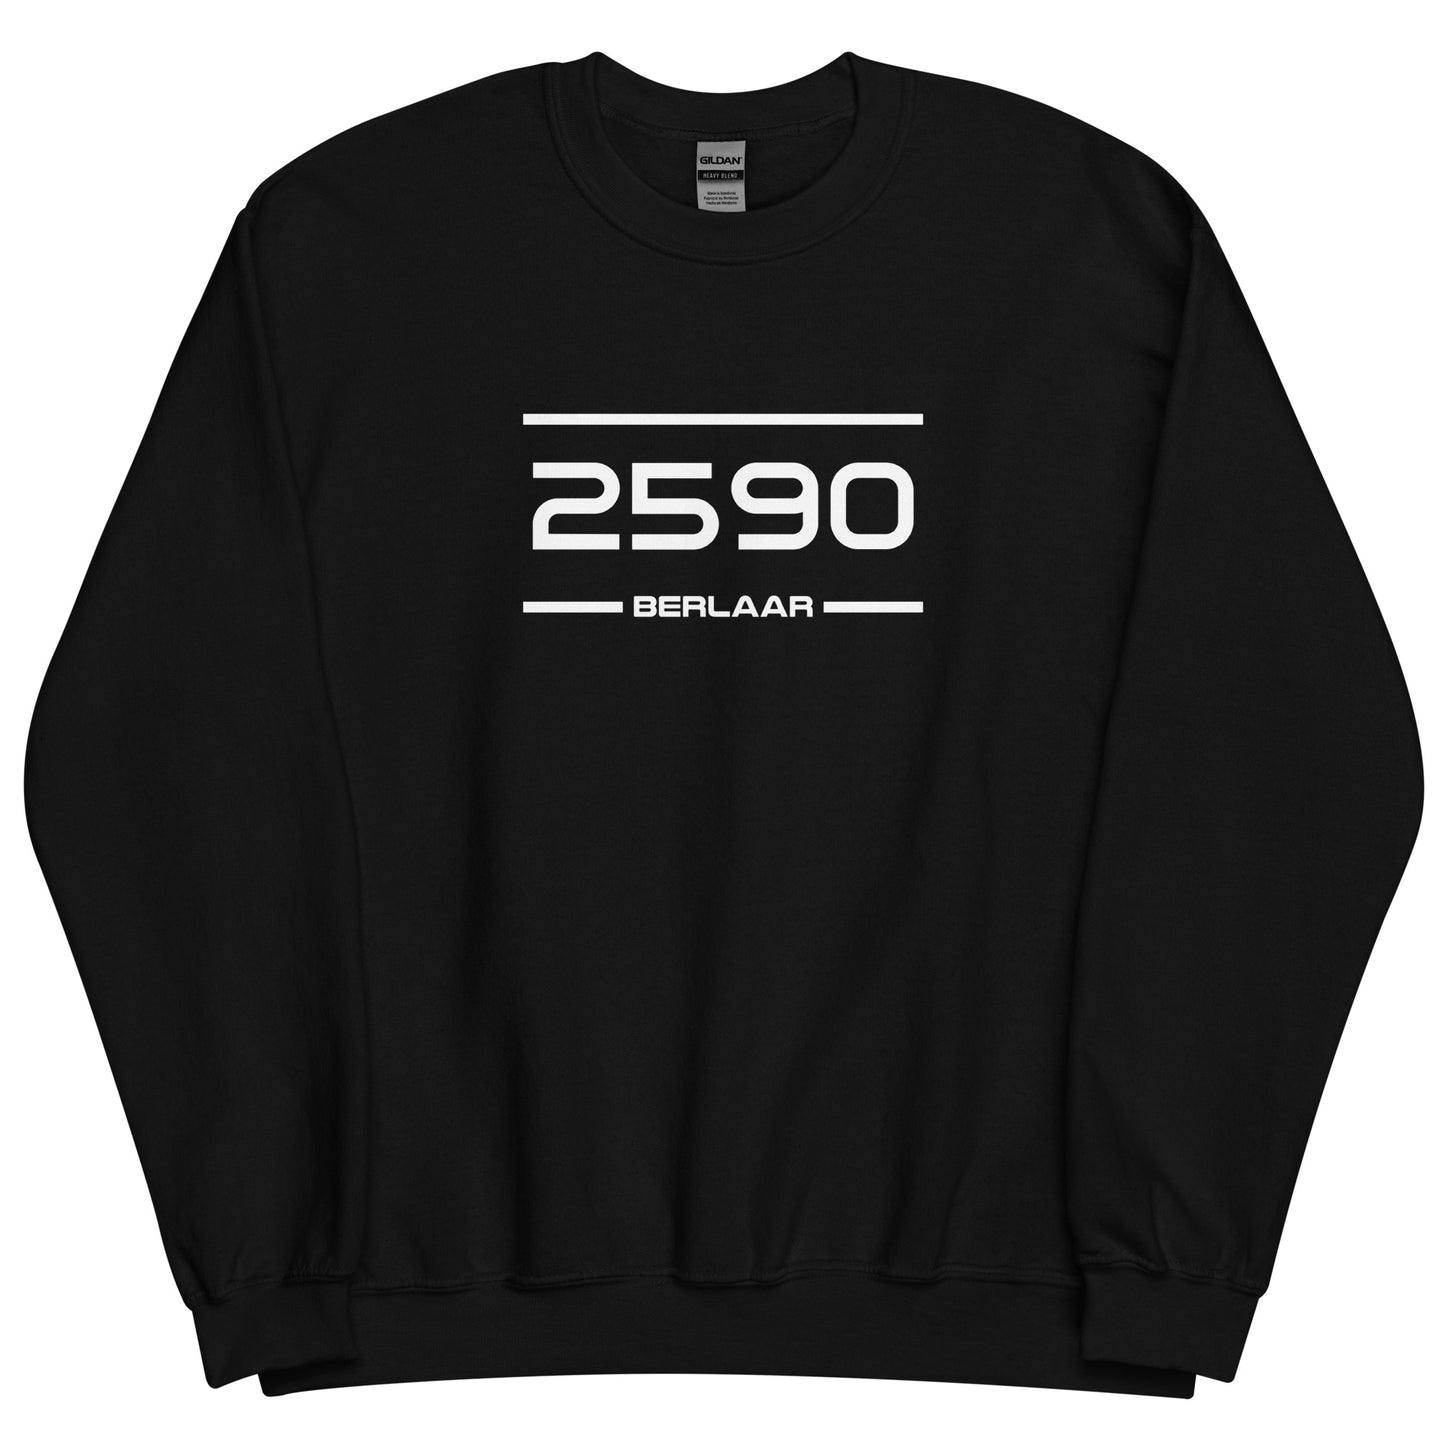 Sweater - 2590 - Berlaar (M/V)